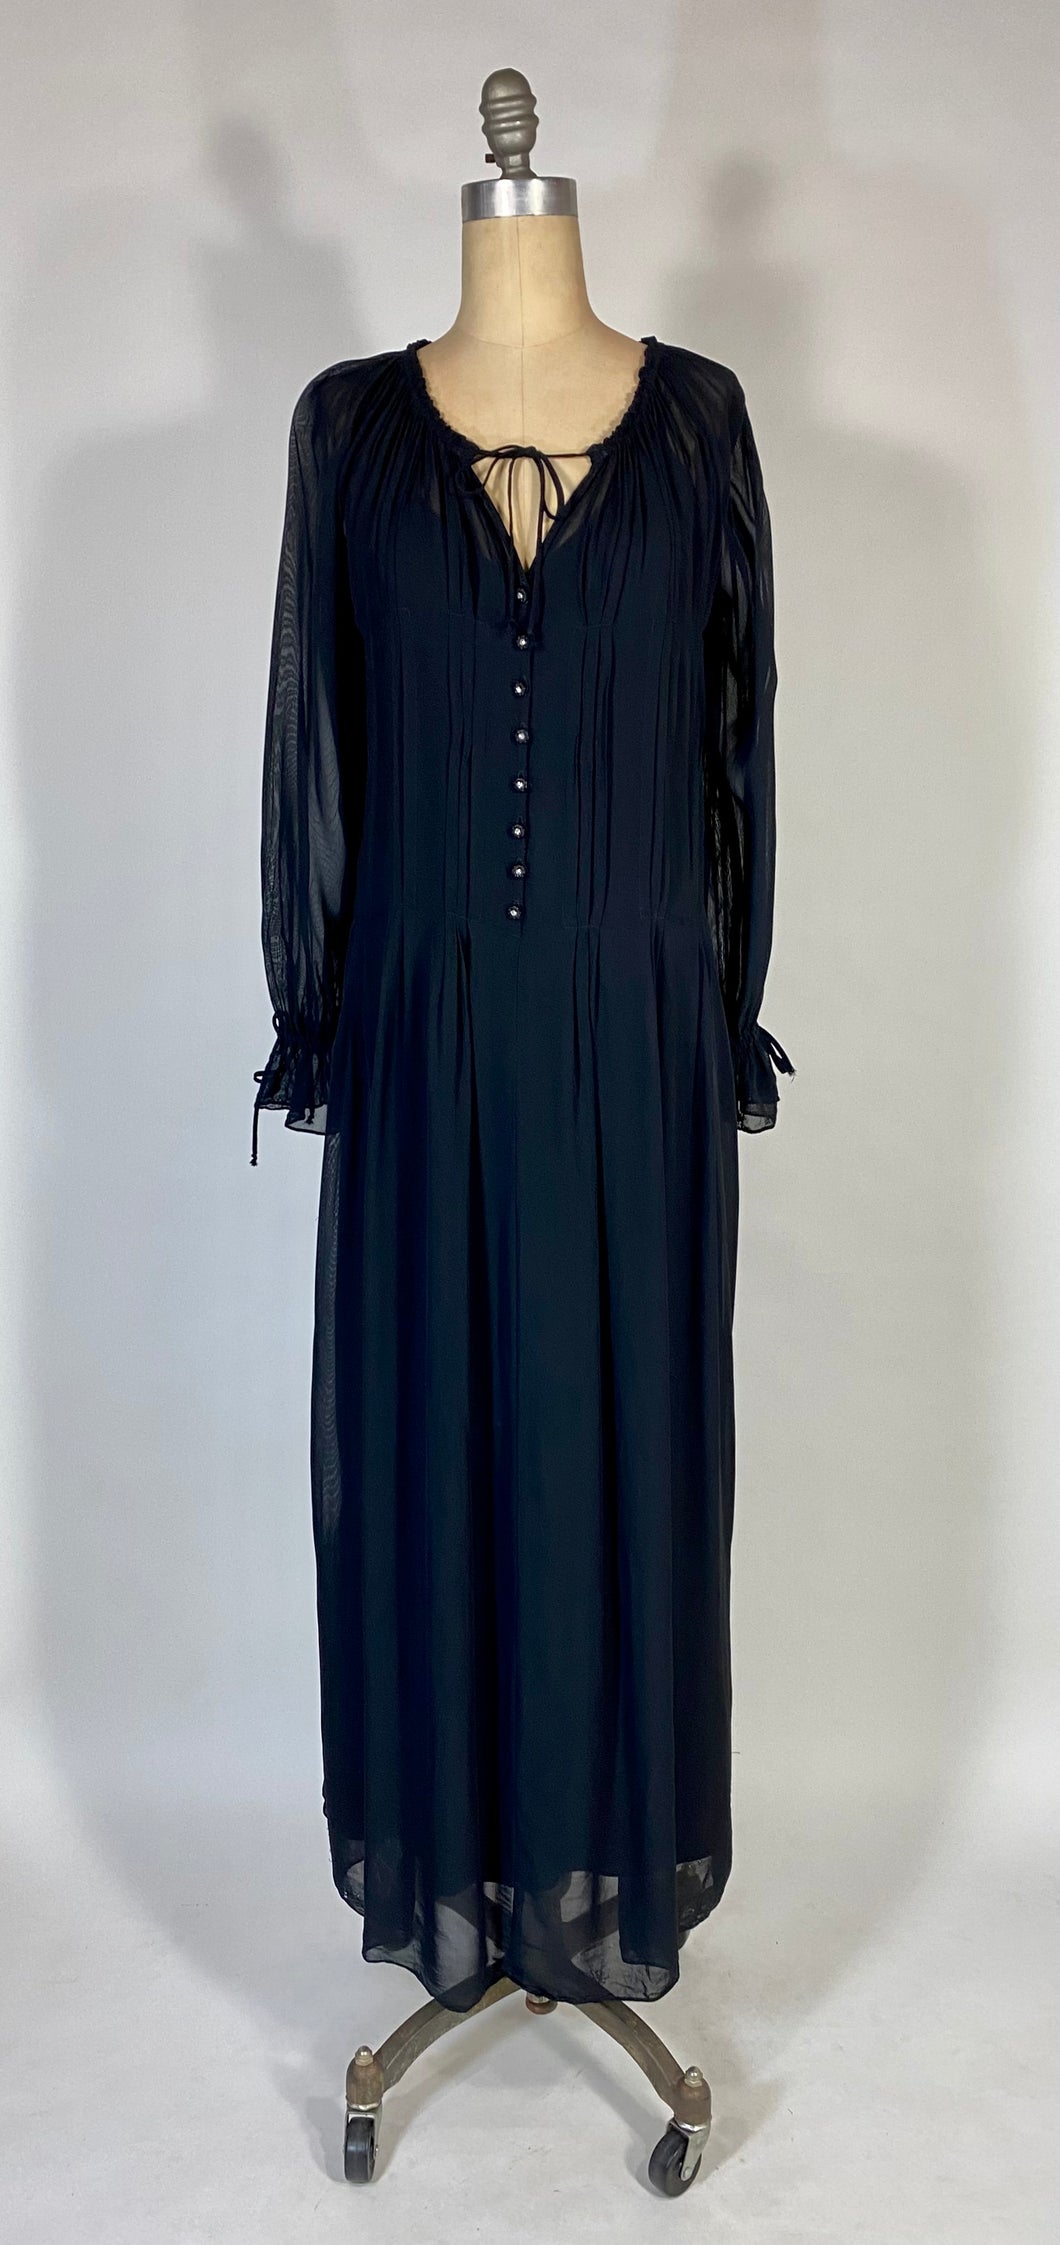 1990's sheer black GOTHIC 2-dress ensemble à la THE CRAFT, STEVIE NICKS